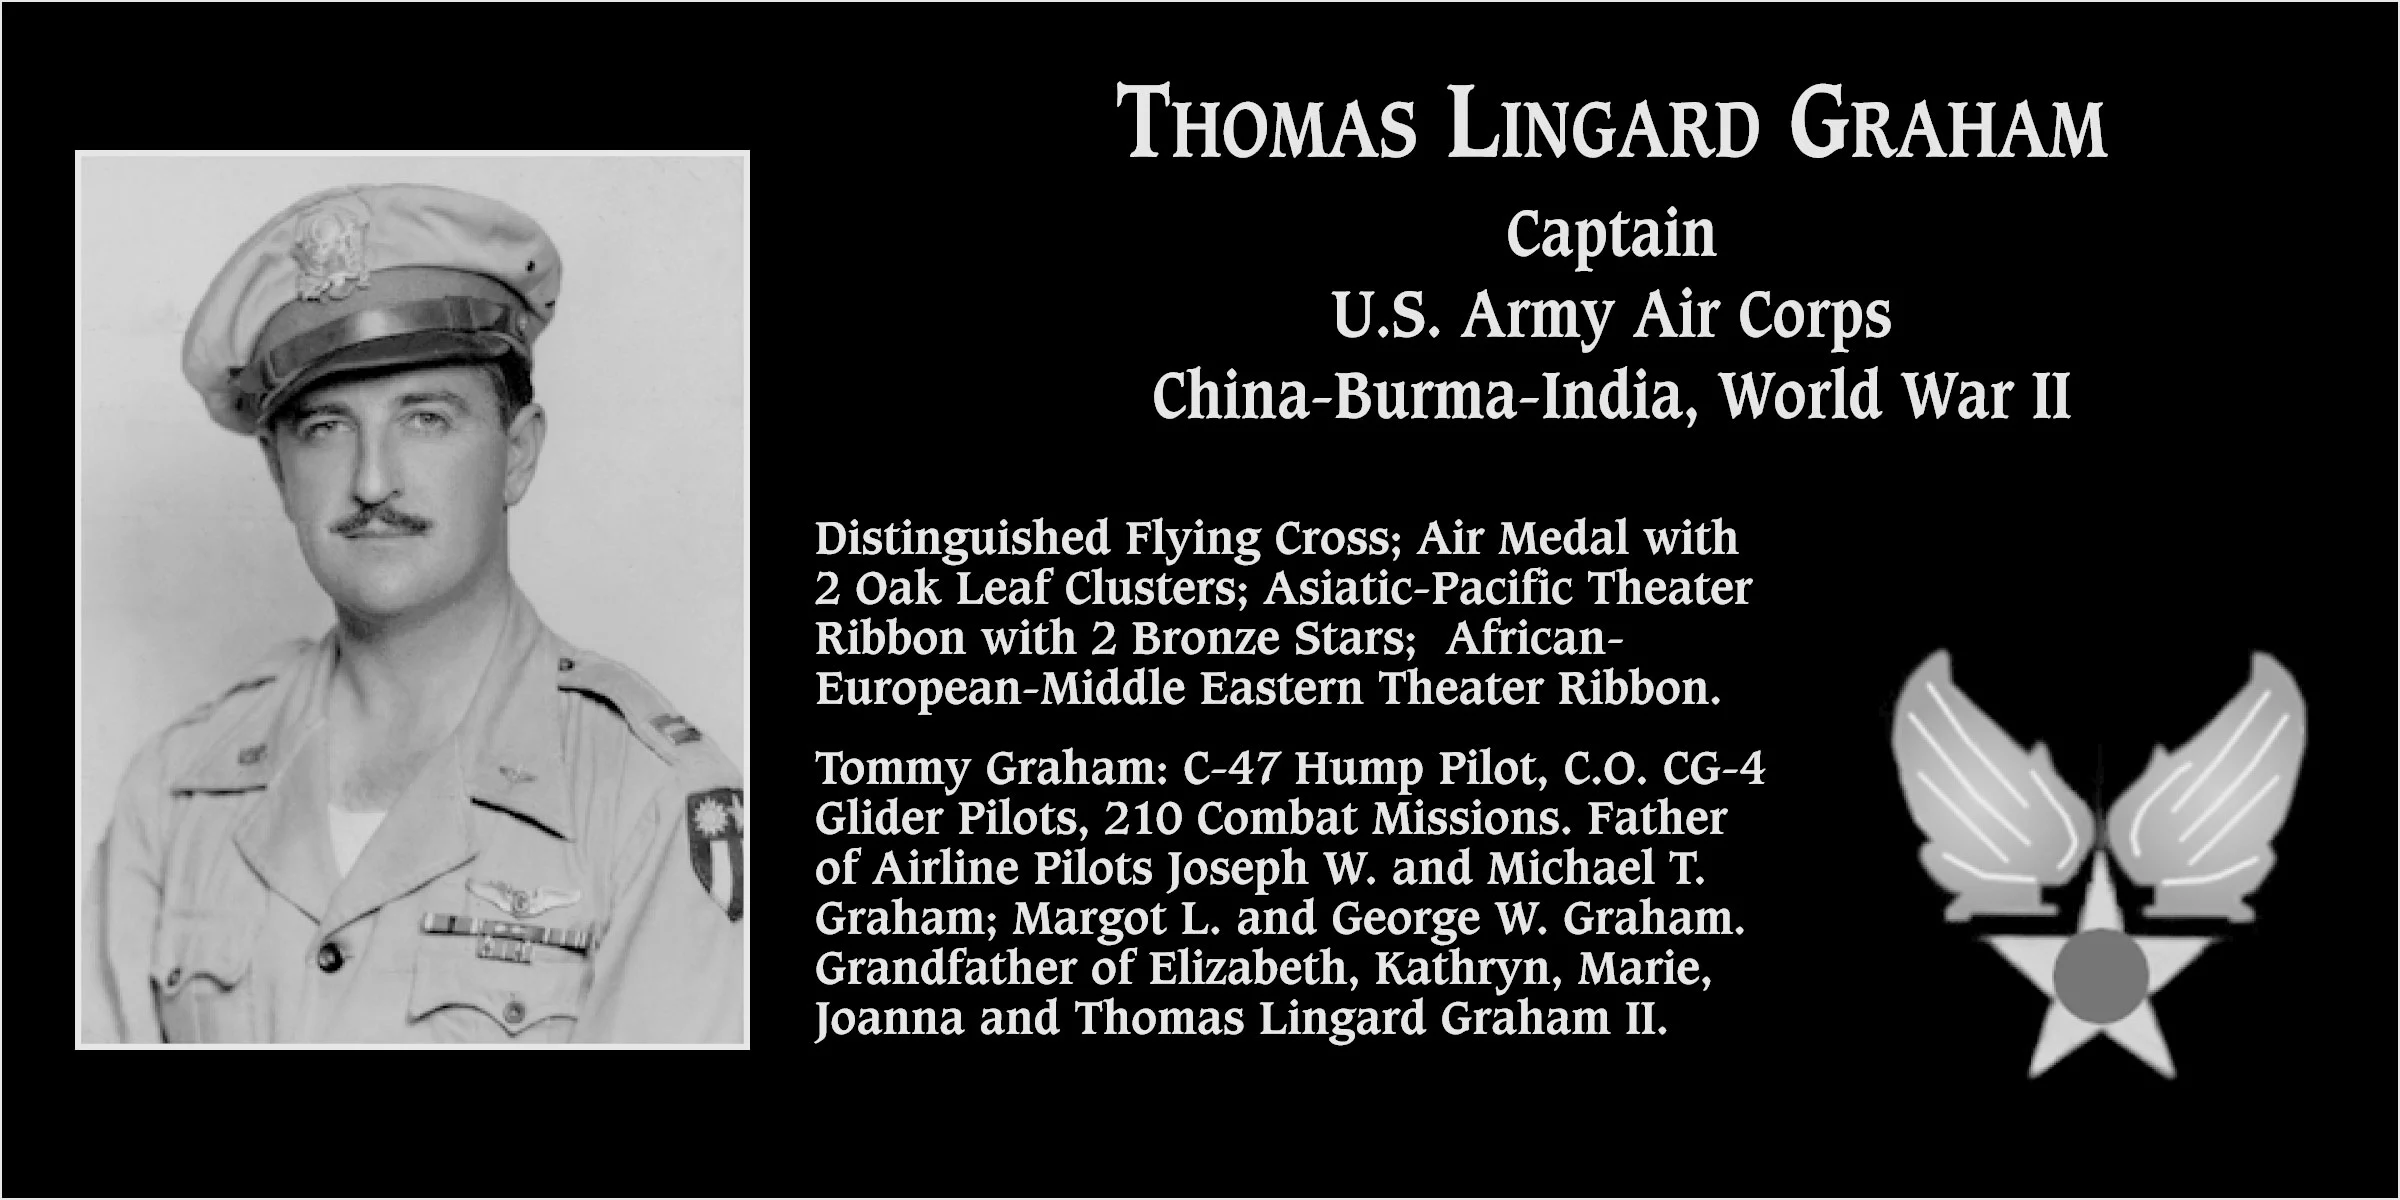 Thomas Lingard Graham